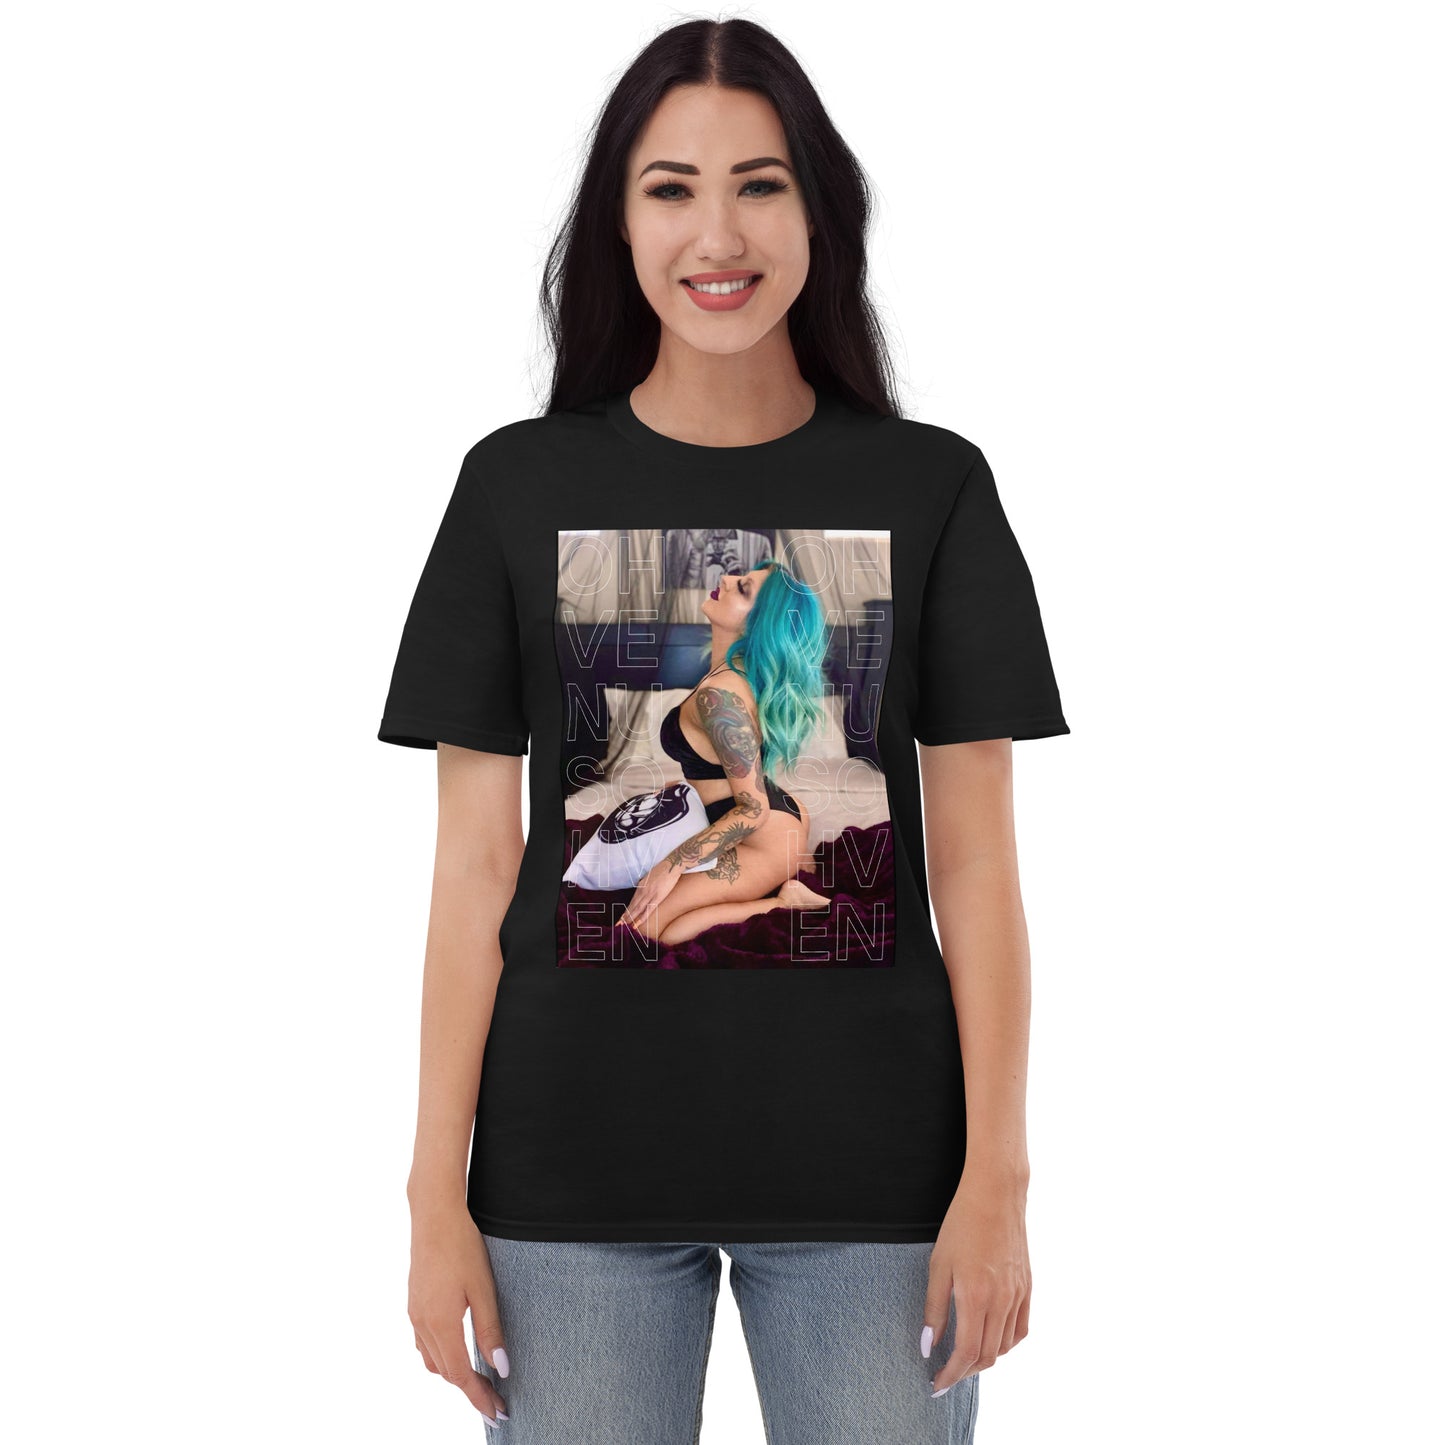 The Real Oh Venus T-Shirt